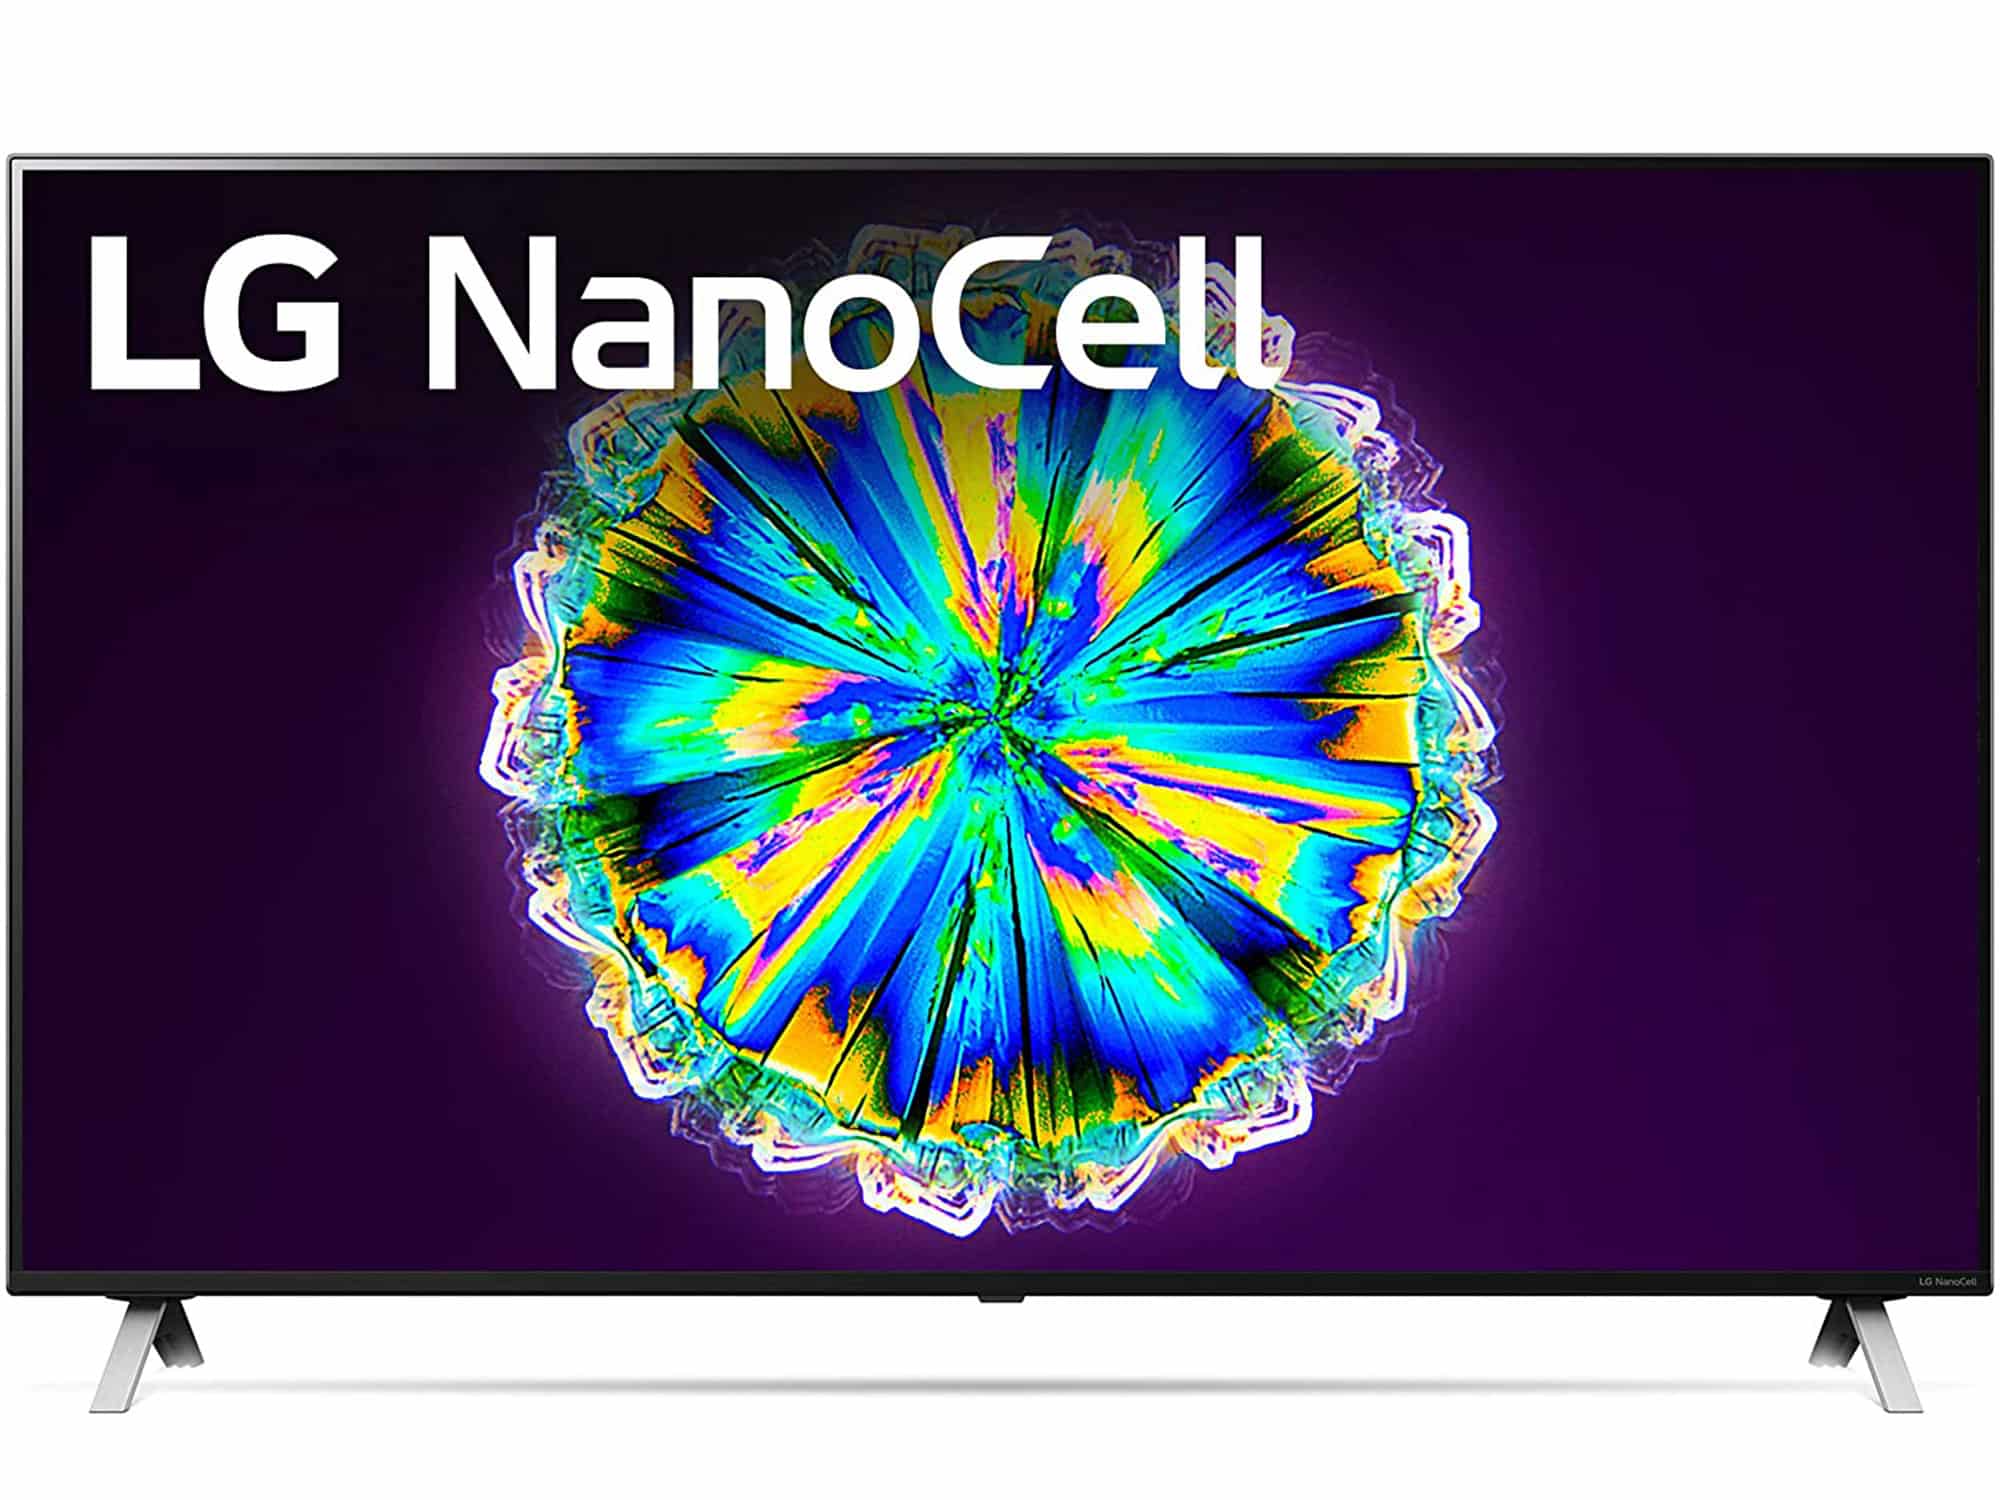 LG nanocell tv